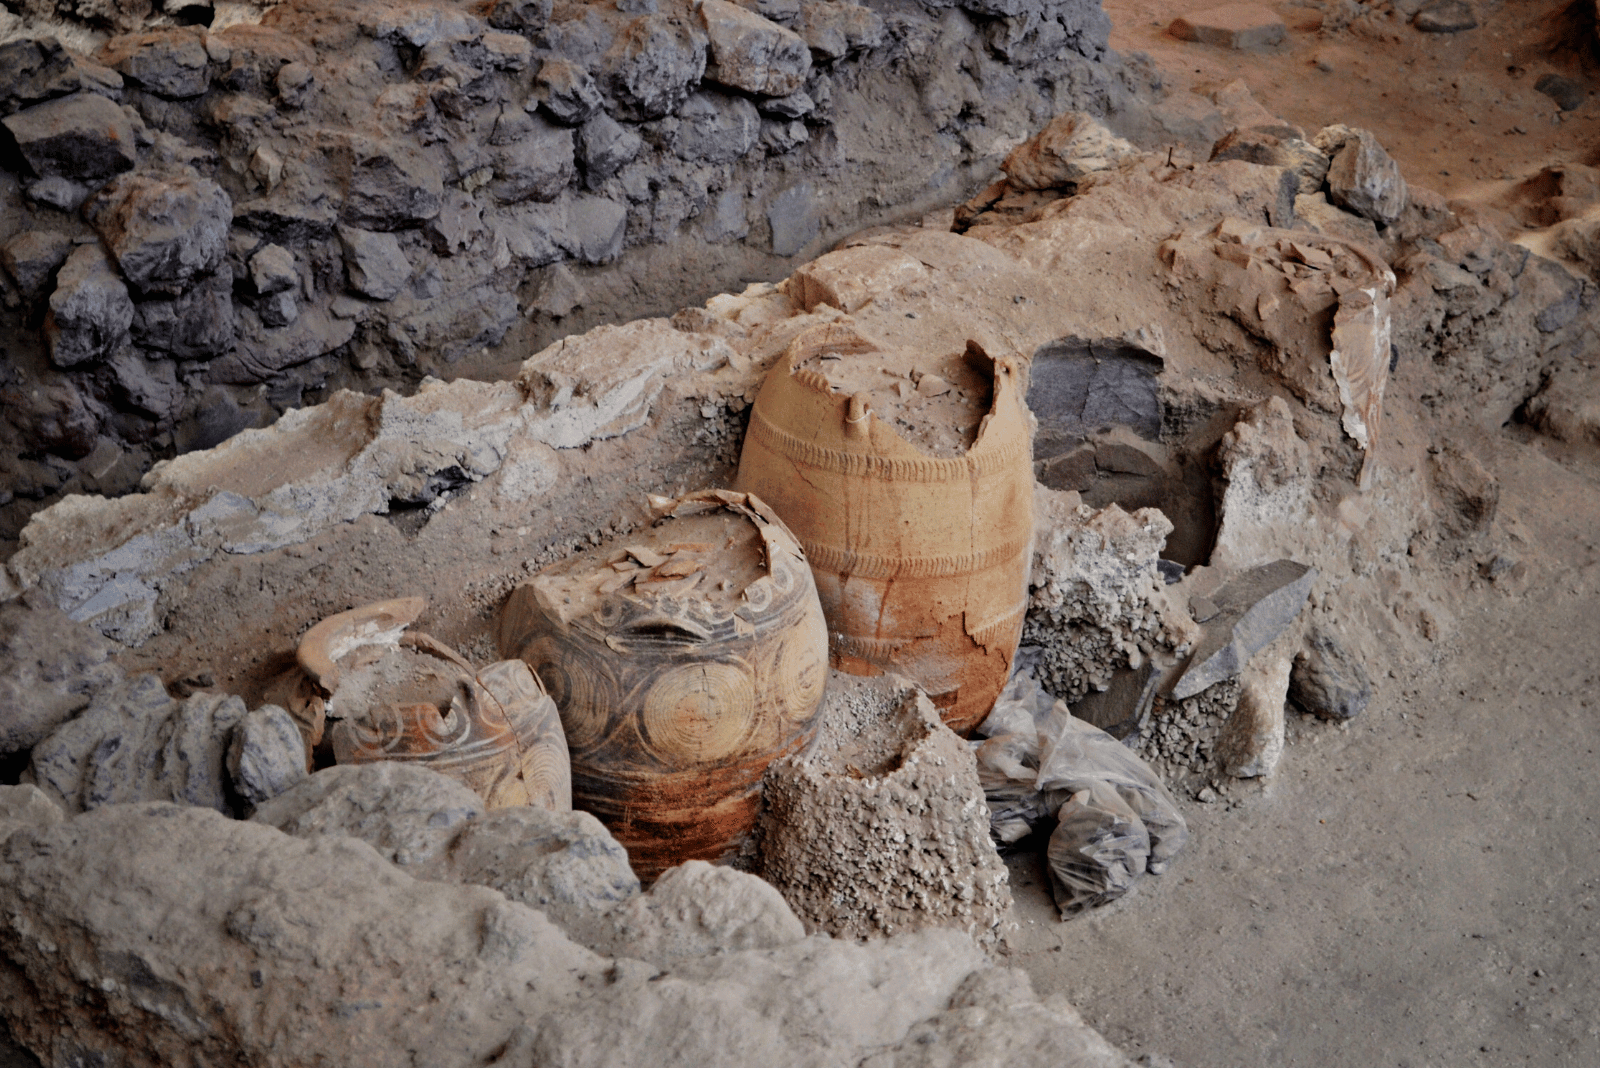 See well-preserved Akotiri artefacts